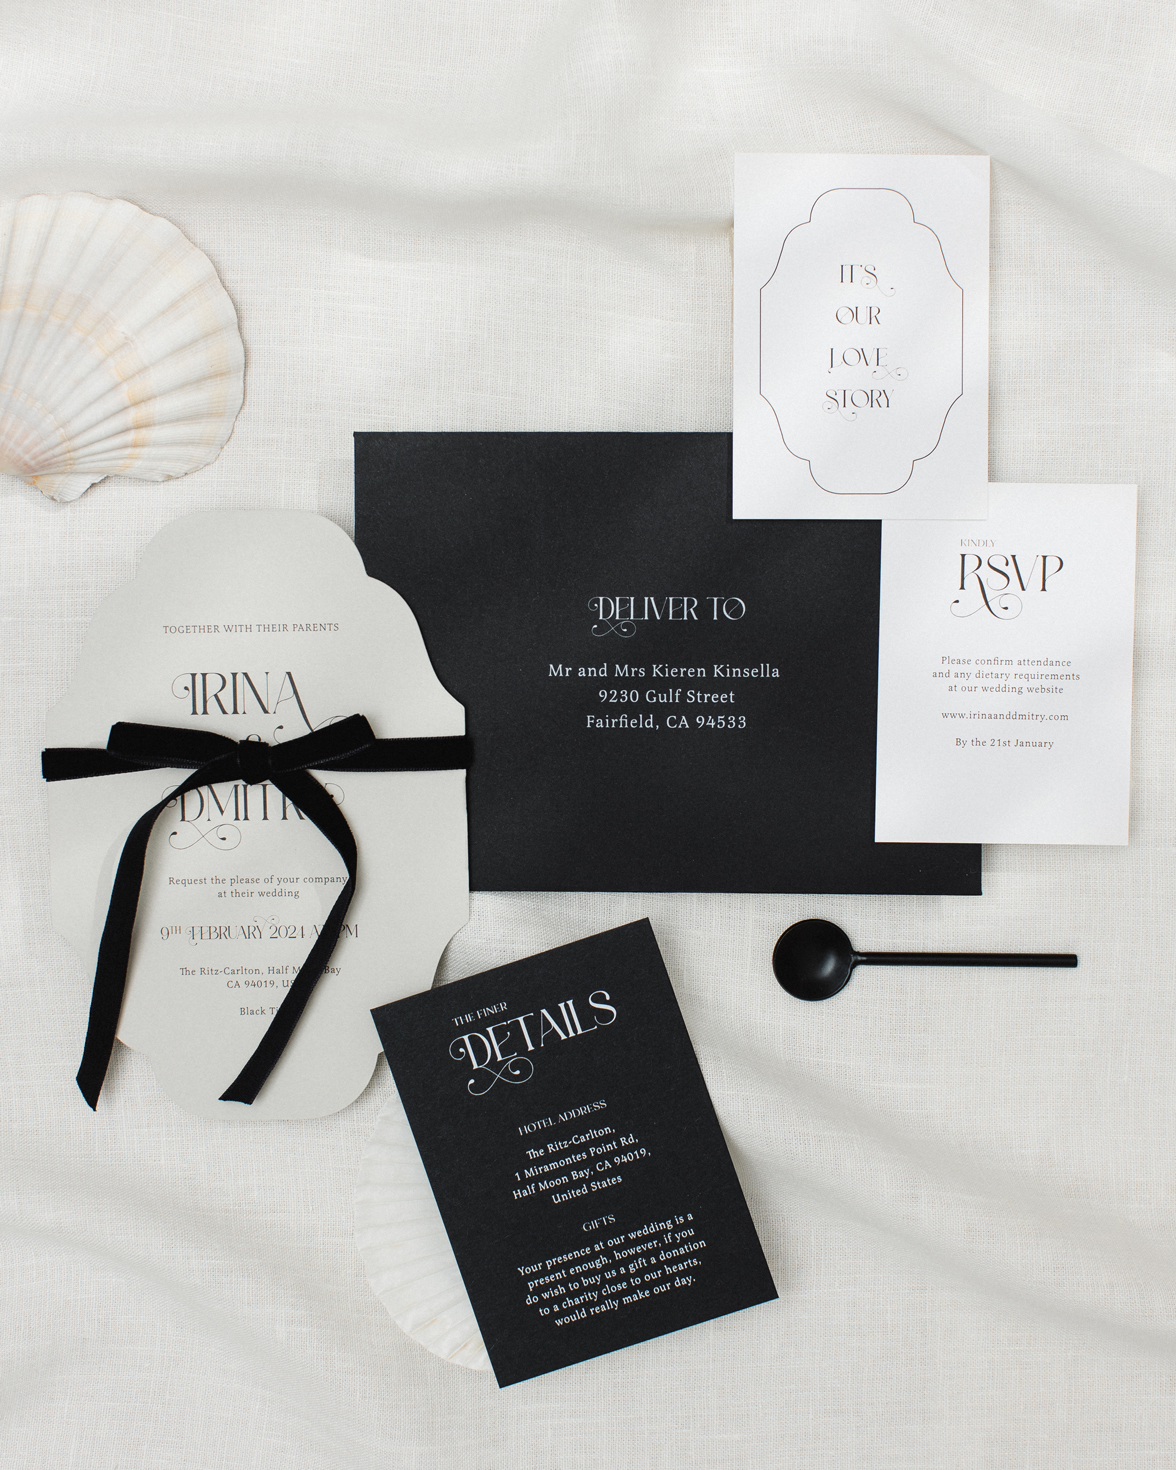 Grey die cut vintage shape wedding invitation. White RSVP card and black details card. Black bow tie